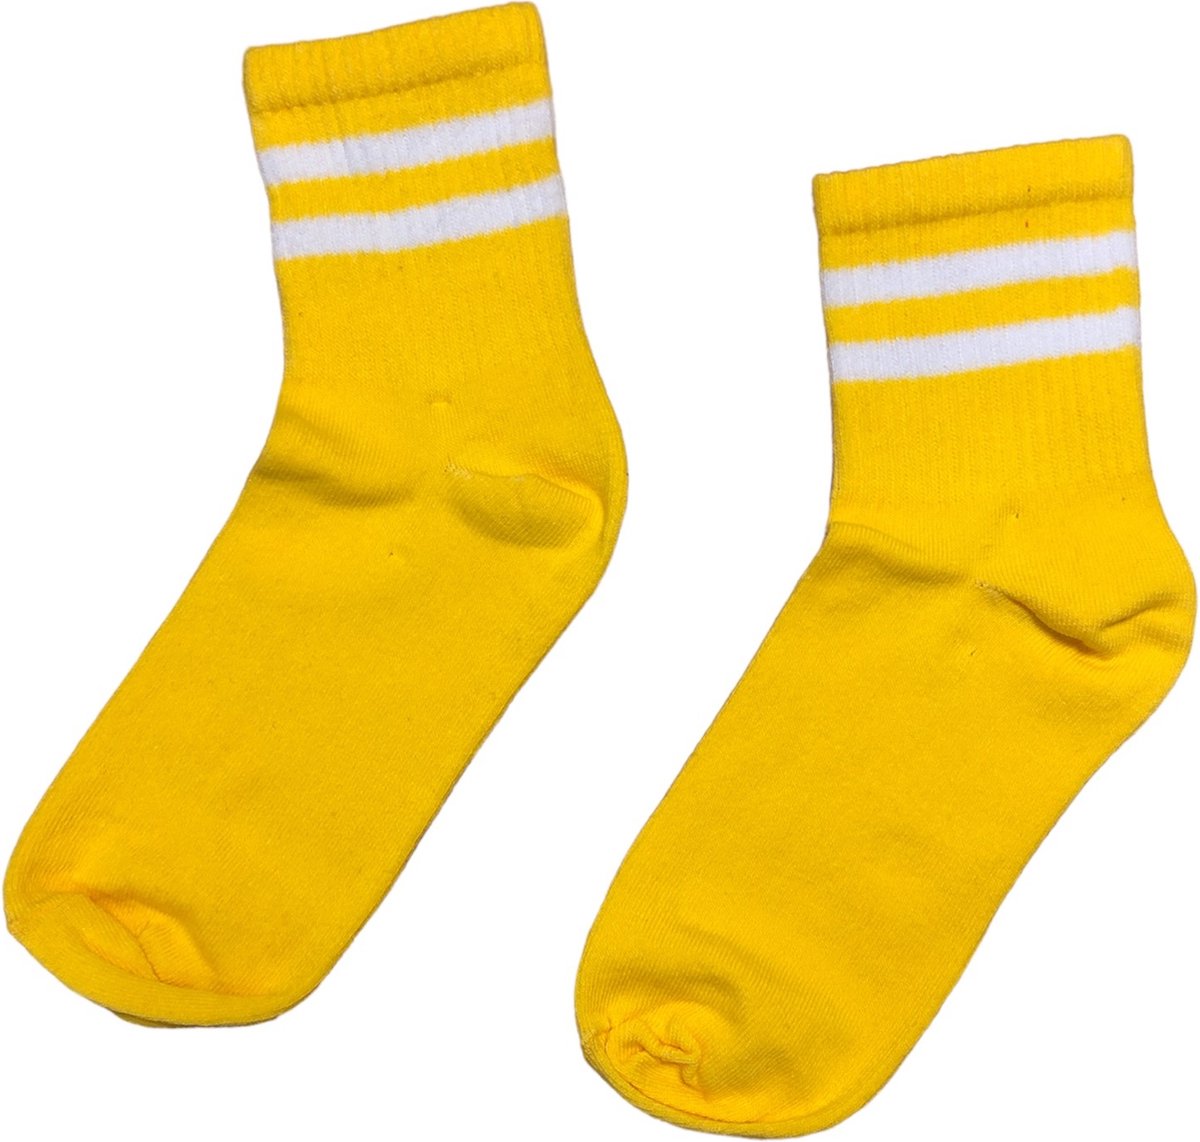 Sockston Socks - 2 paren Yellow Sock with White Stripe - Yellow Sock - Grappige Sokken - Vrolijke Sokken